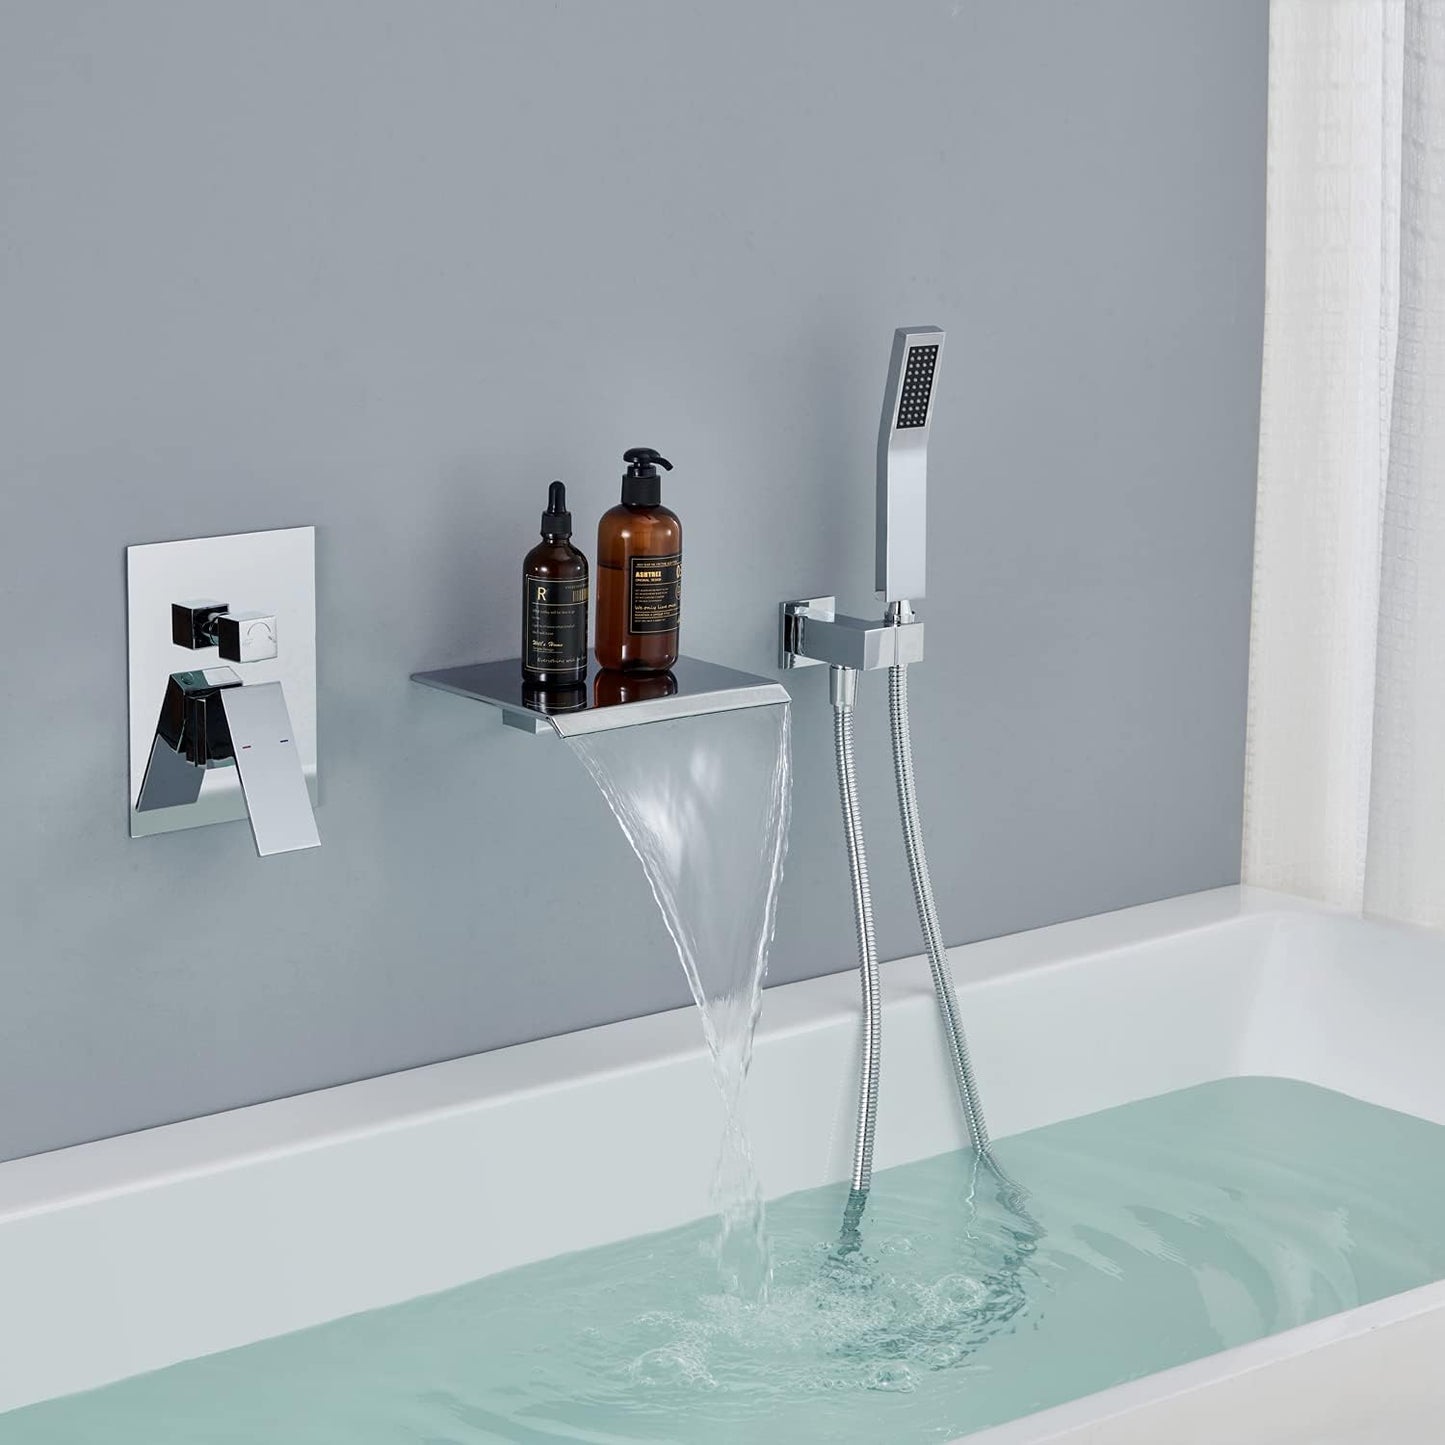 Jabbol Waterfall Tub Faucet Wall Mount Roman Tub Filler Chrome Single Handle Brass Bathroom Bathtub Faucet with Hand Shower (Chrome)